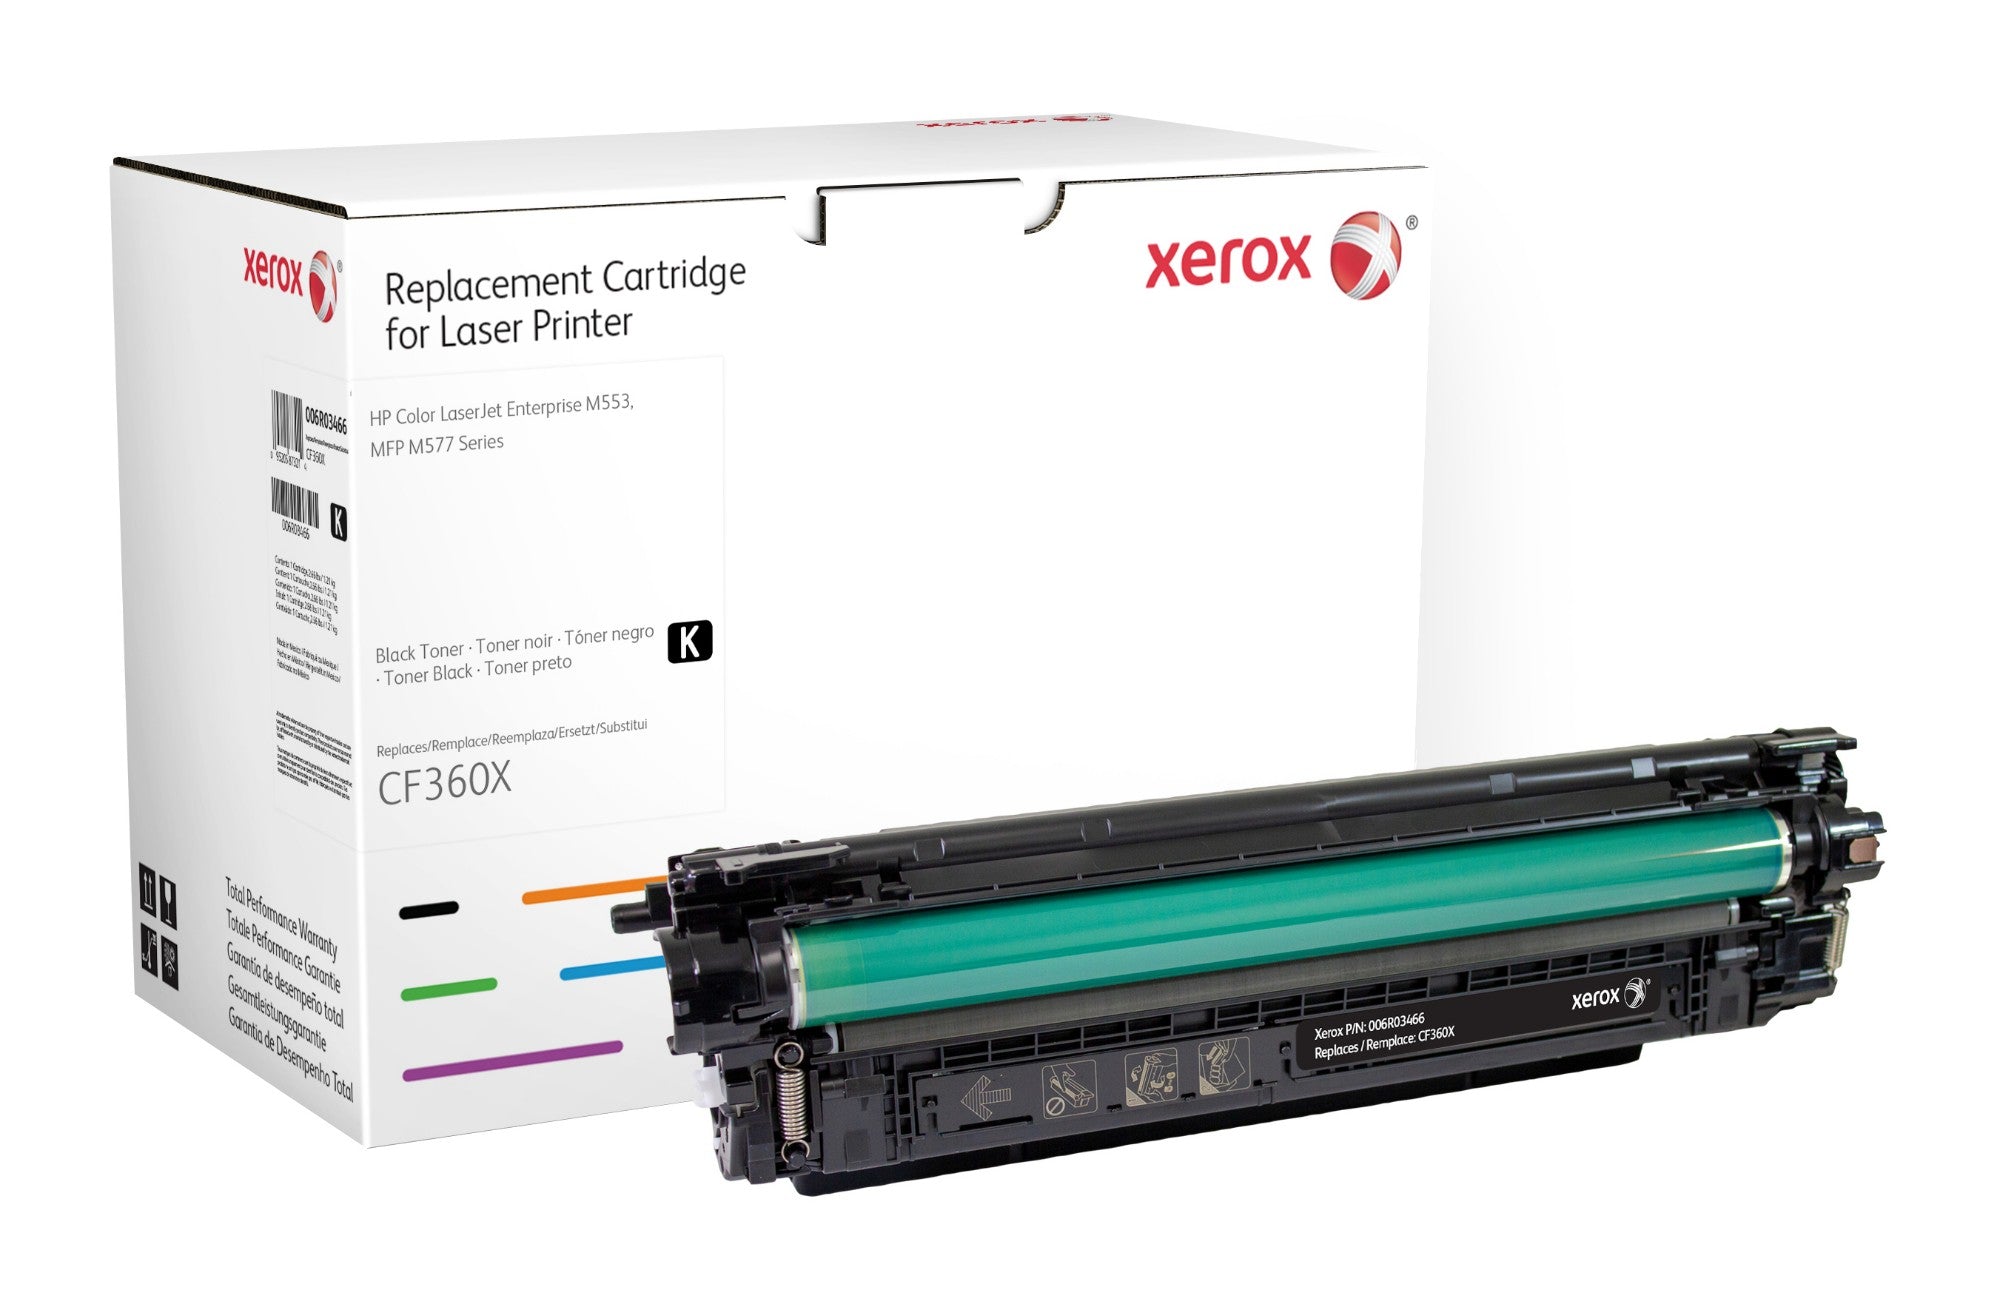 Xerox 006R03466 Toner cartridge black, 12.5K pages (replaces HP 508X/CF360X) for HP CLJ M 552